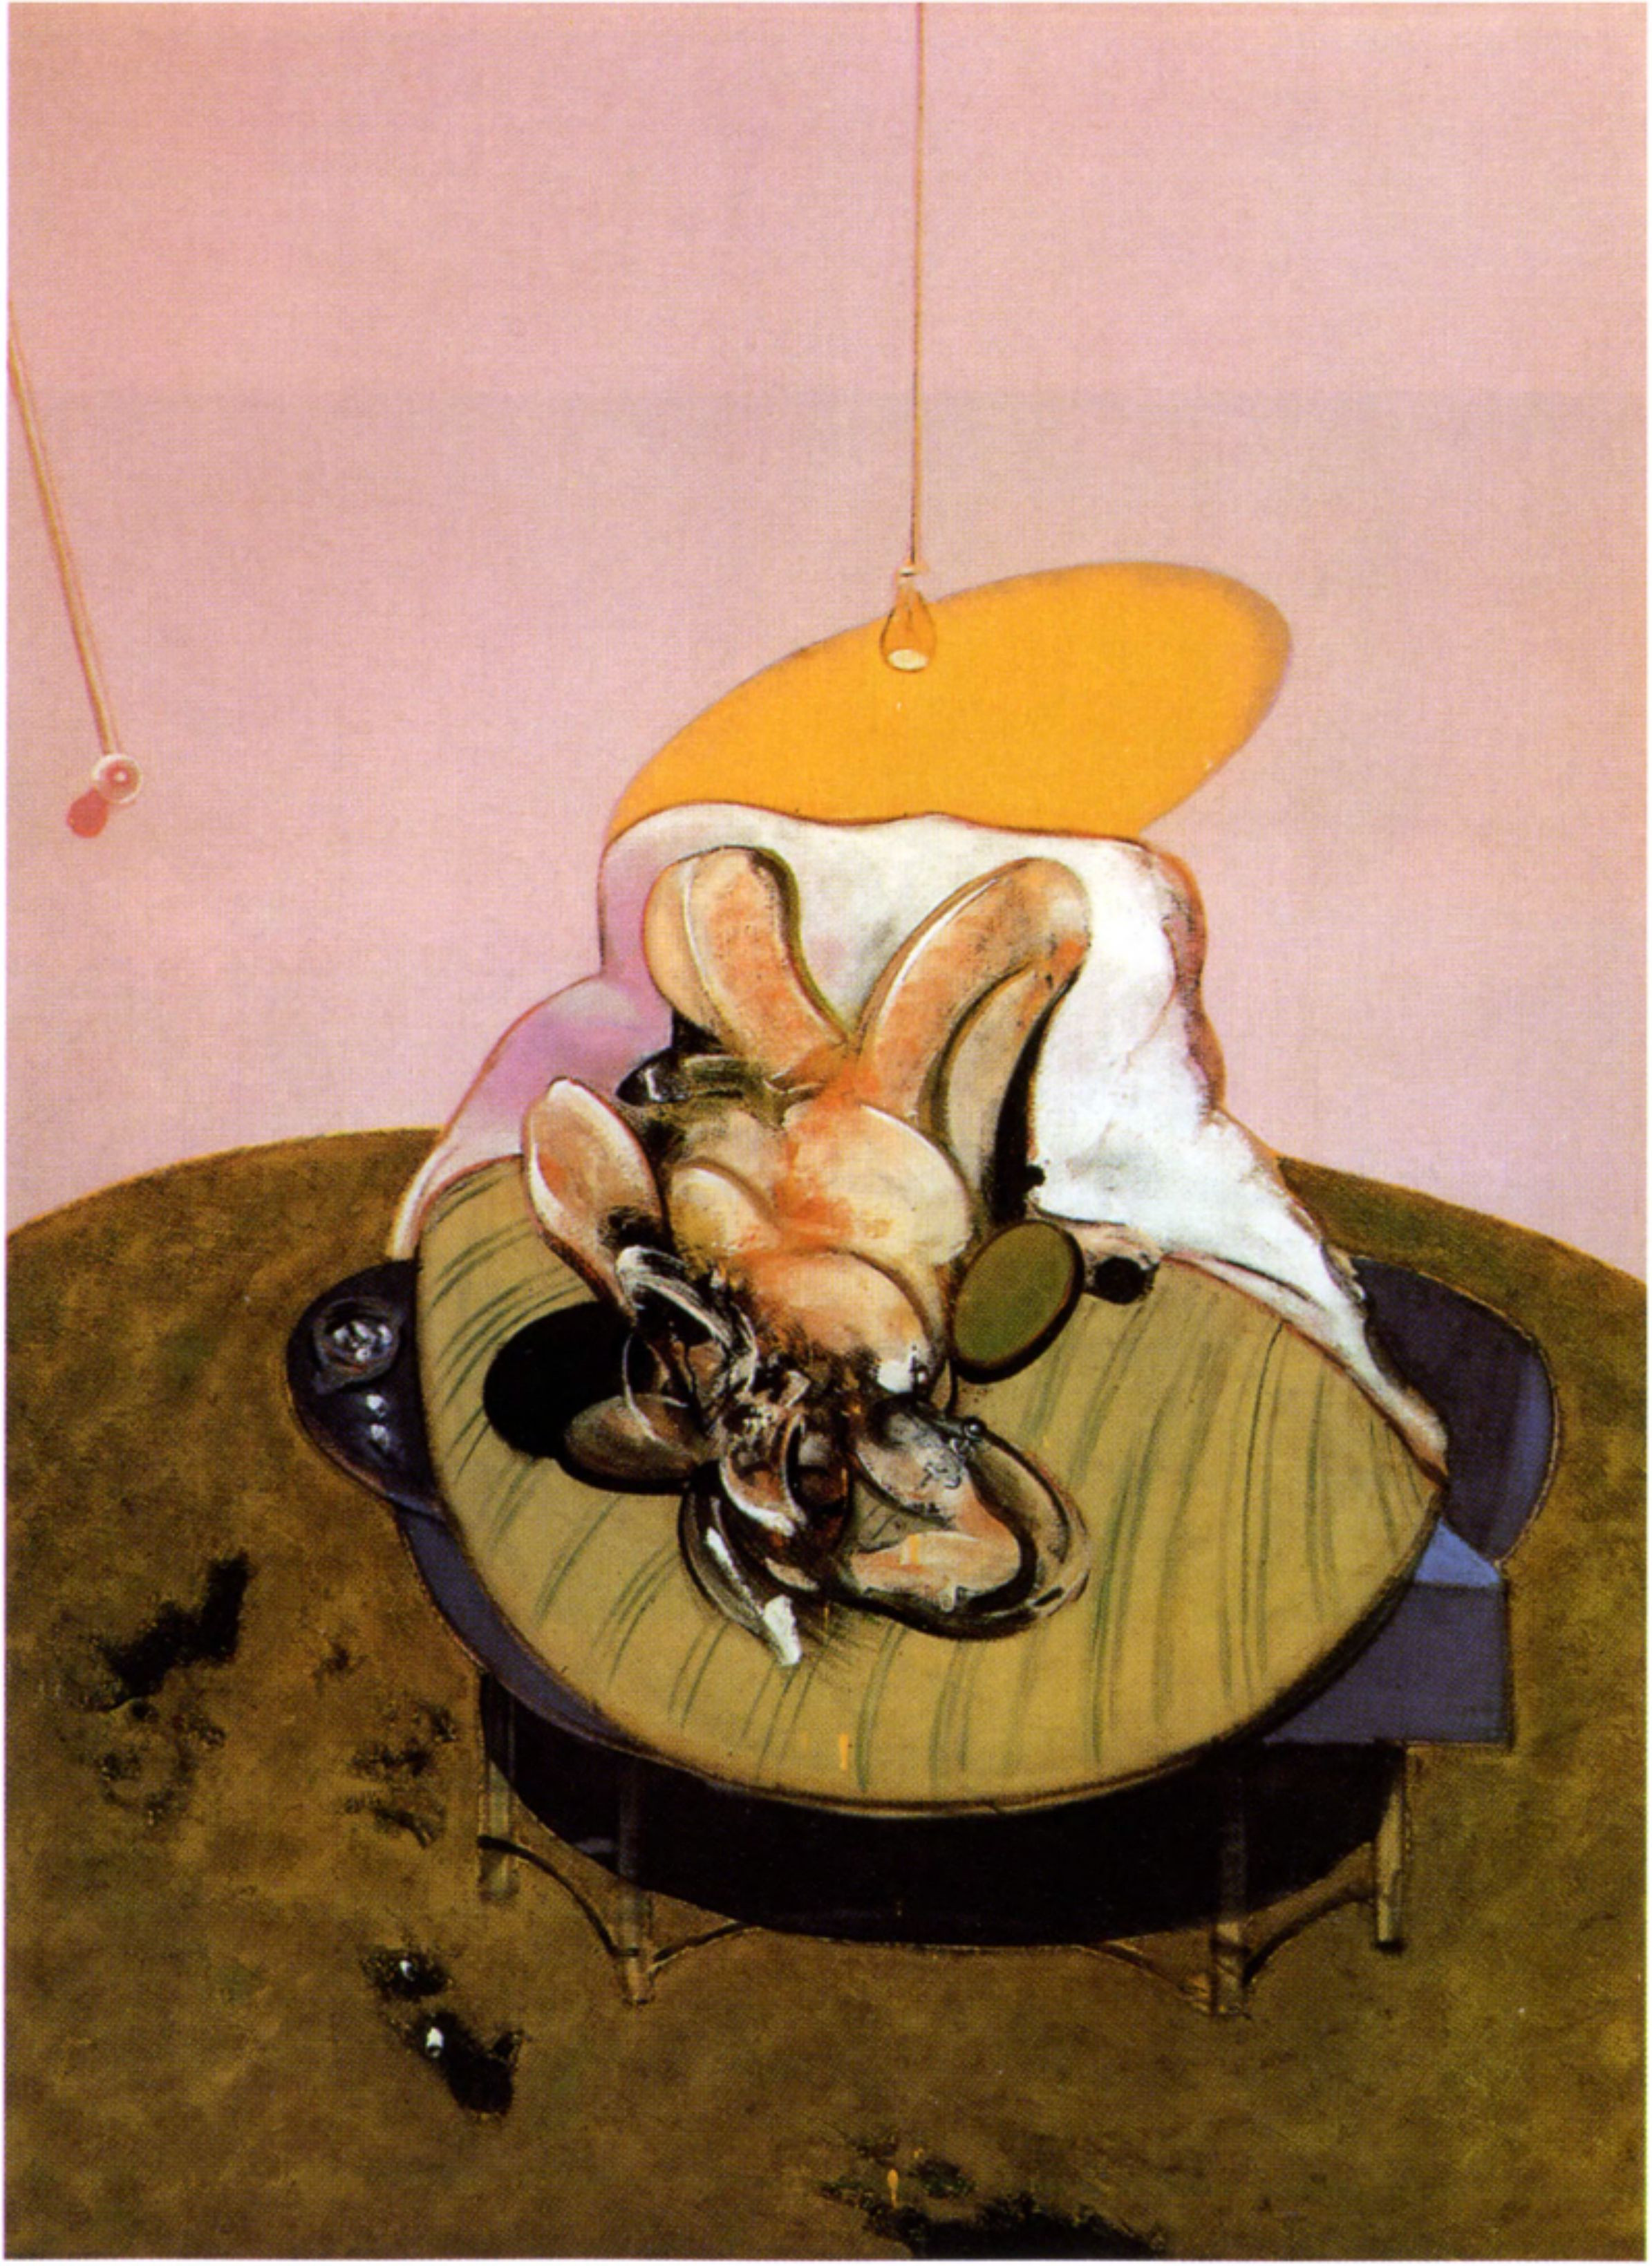 Ф. Бэкон. Лежащая фигура. 1969. Масло на&nbsp;холсте, 198×147.5&nbsp;см.